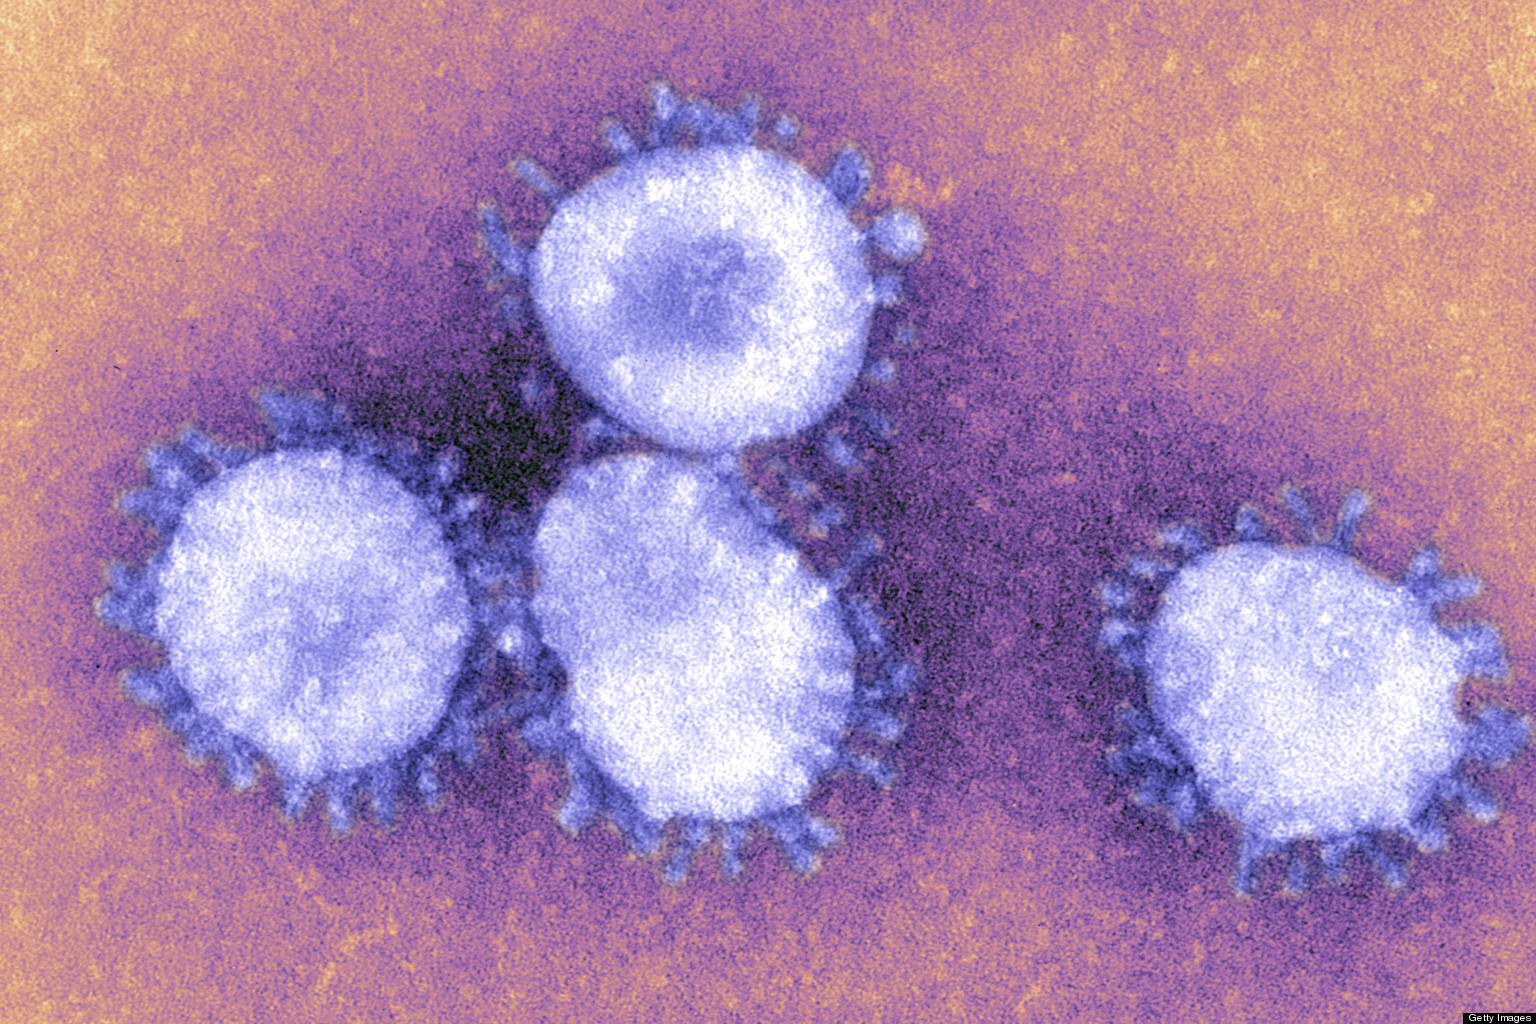 SARS-Like Virus: 4 New Coronavirus Cases Confirmed In Saudi Arabia | HuffPost